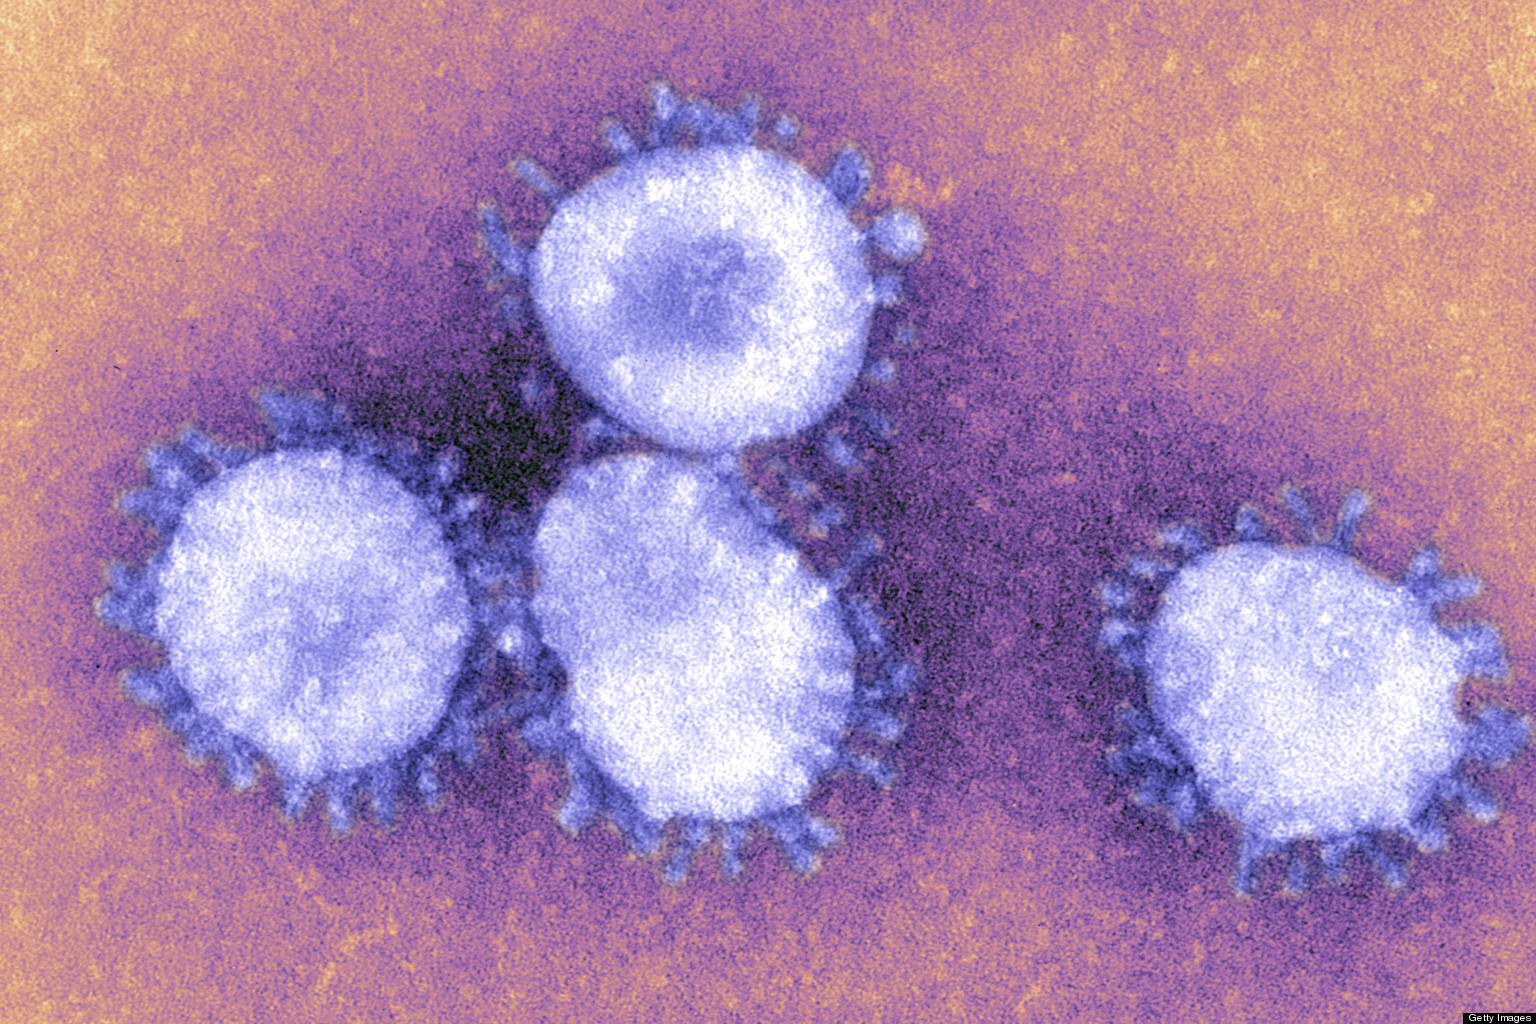 SARS-Like Virus: 4 New Coronavirus Cases Confirmed In Saudi Arabia | HuffPost